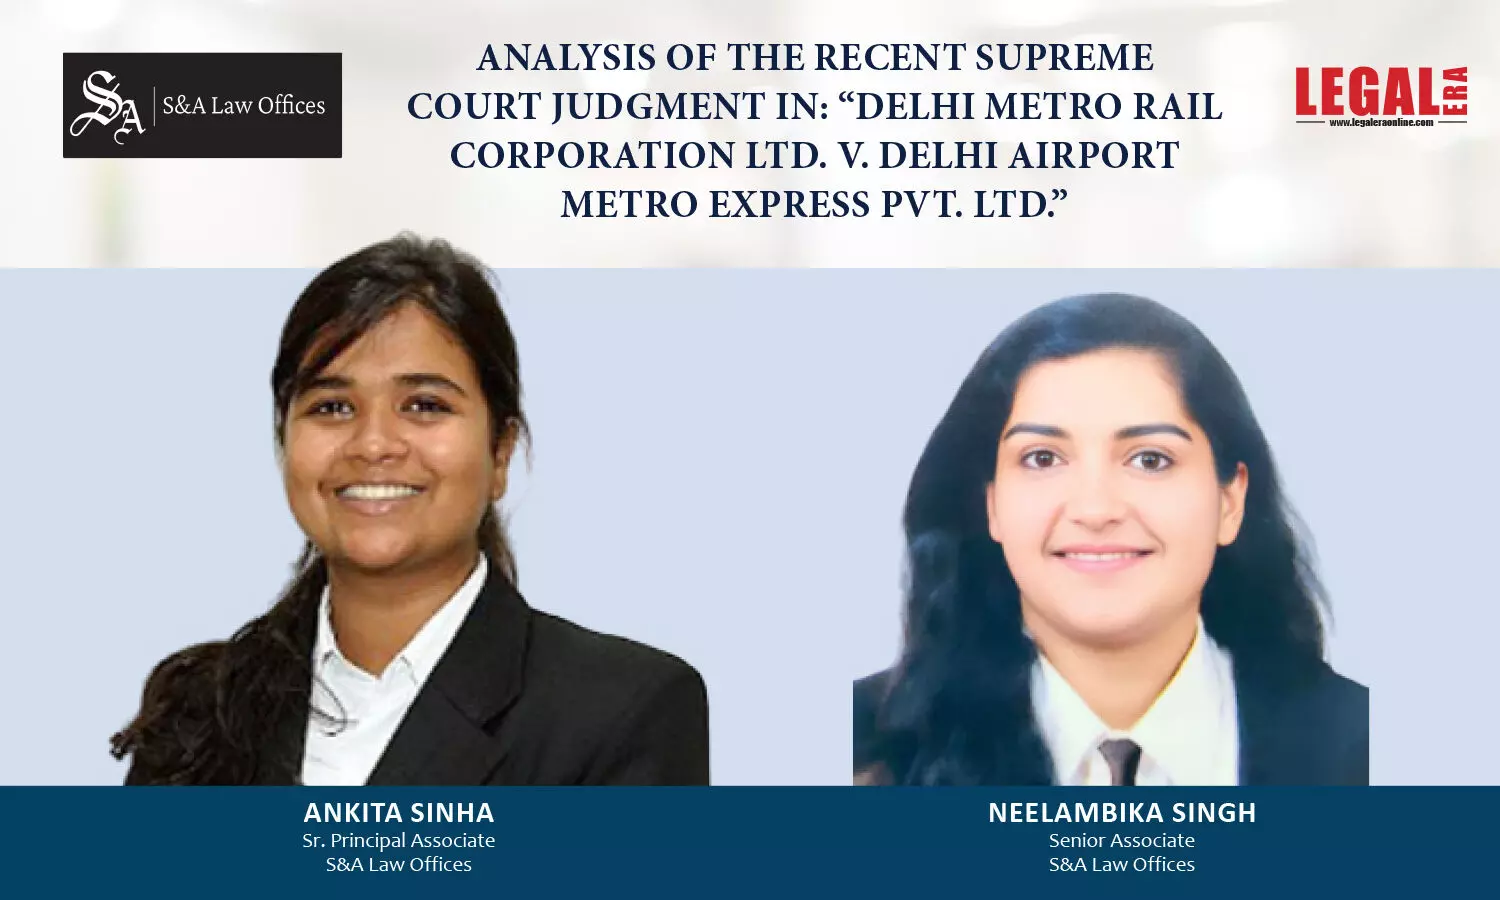 Analysis Of The Recent Supreme Court Judgment In: “Delhi Metro Rail Corporation Ltd. V. Delhi Airport Metro Express Pvt. Ltd.”